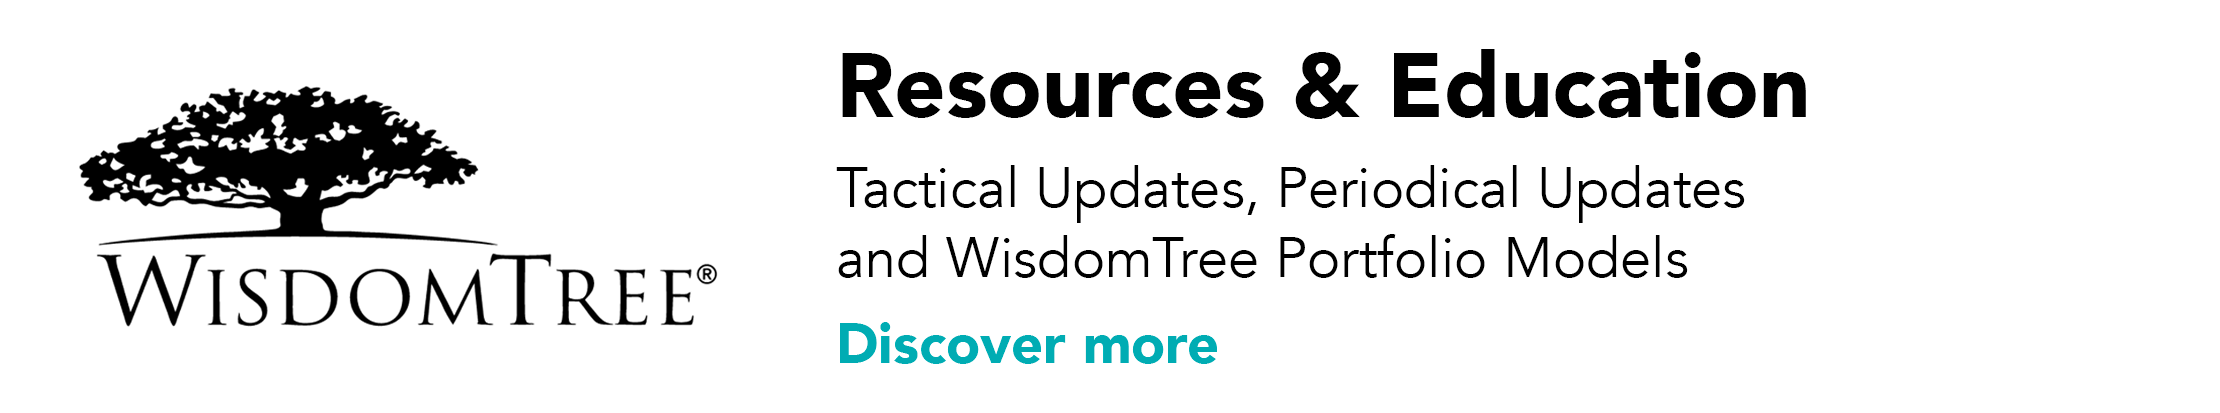 WisdomTree: Resources & Education